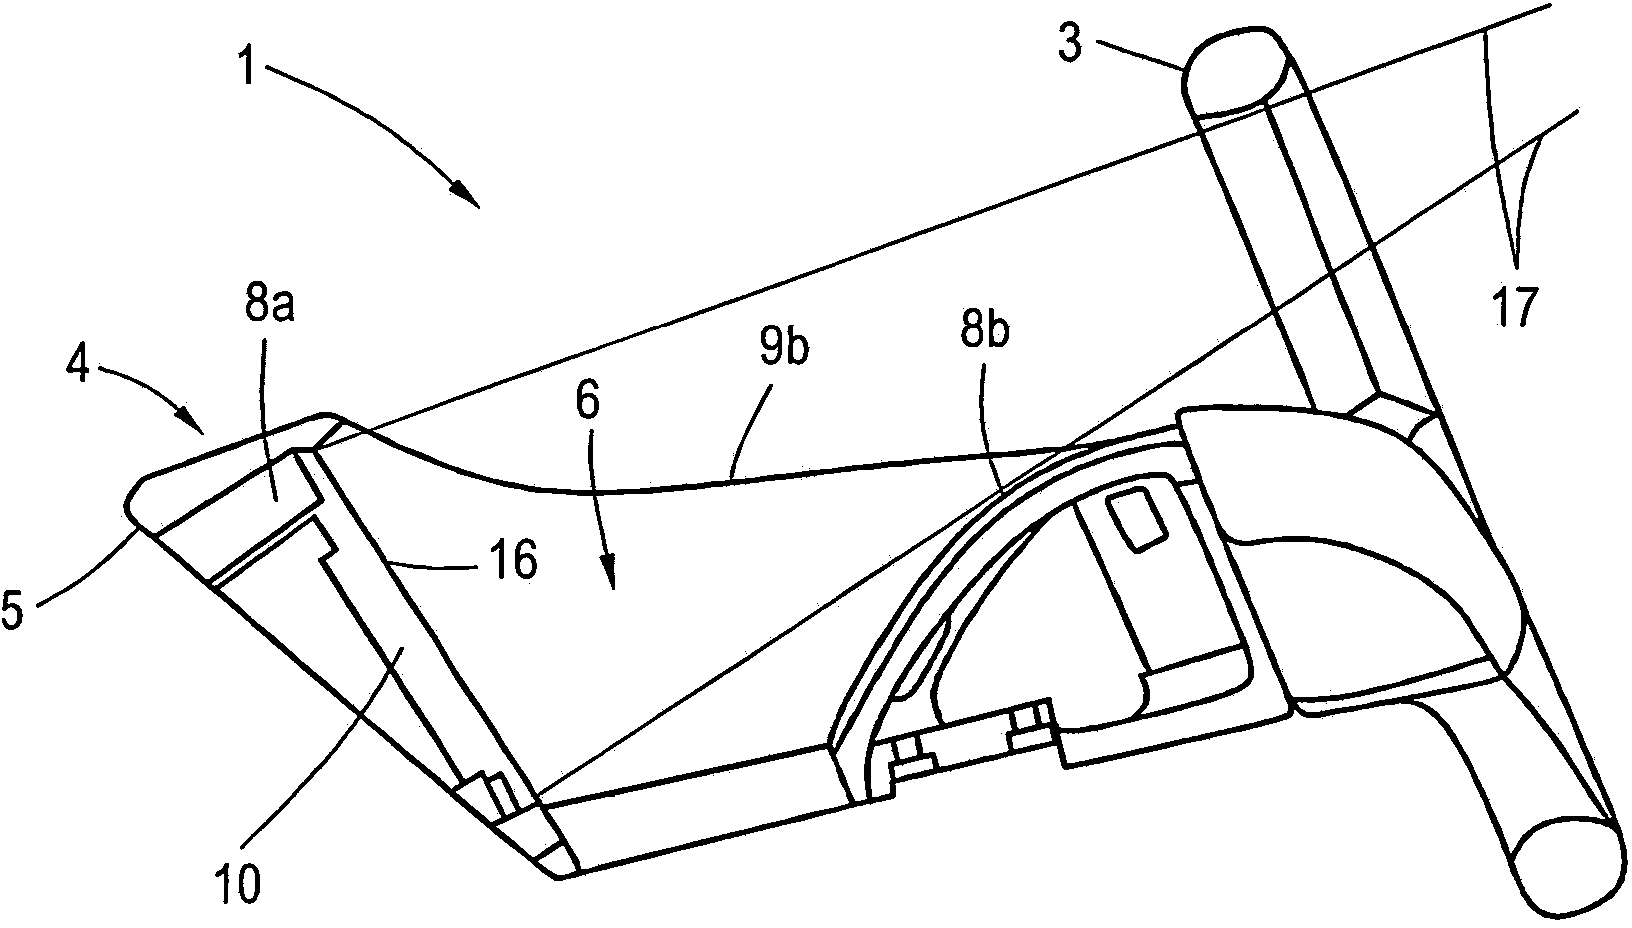 Steering wheel arrangement for a motor vehicle